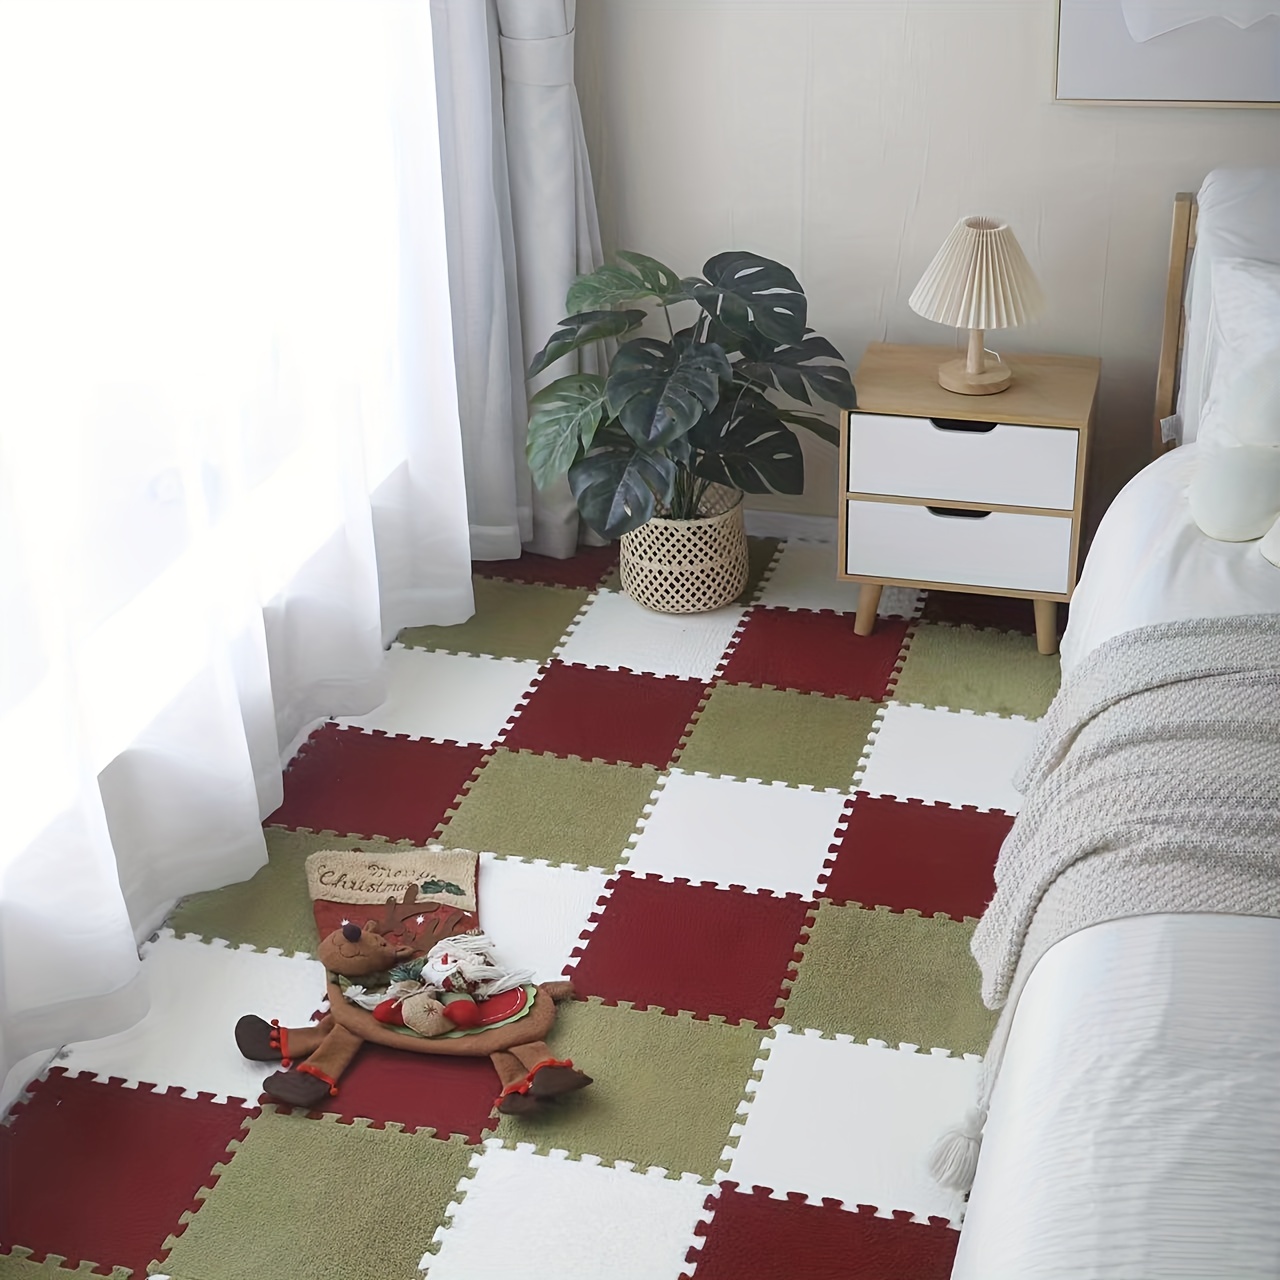 Interlocking Foam Tiles,10 Pcs Puzzle Play Mat Rug,Plush Carpet  Squares,Plush Puzzle Foam Floor,for Living Room,Home Decor,30x30  Cm(Color:Apricot+Dark